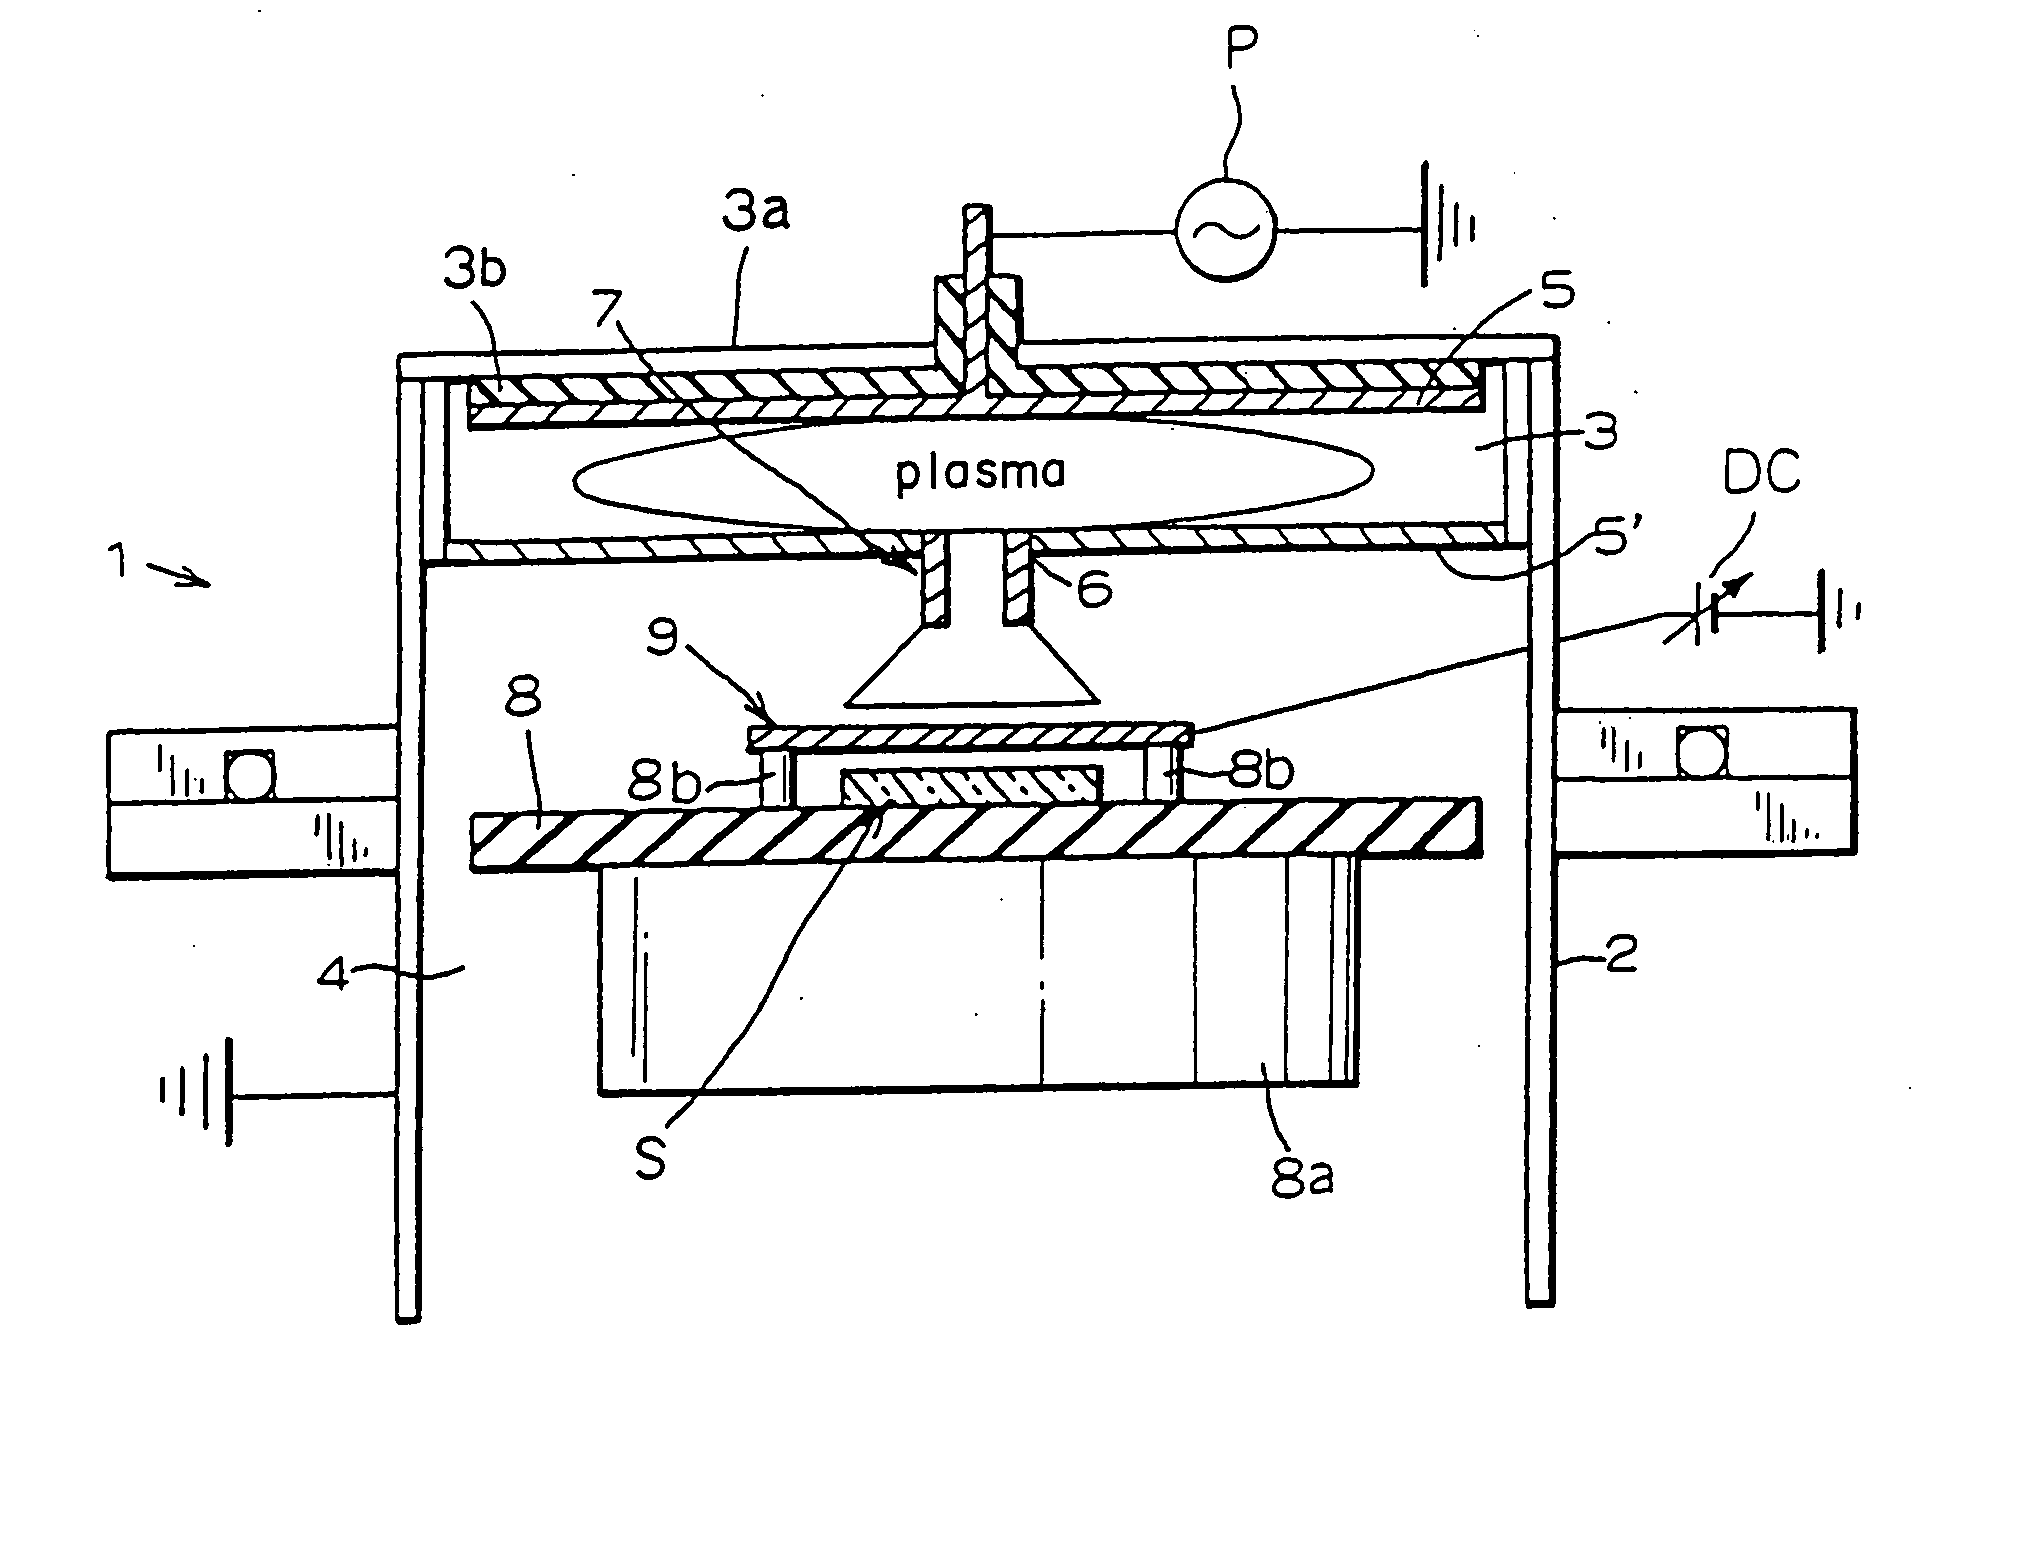 Surface treatment apparatus